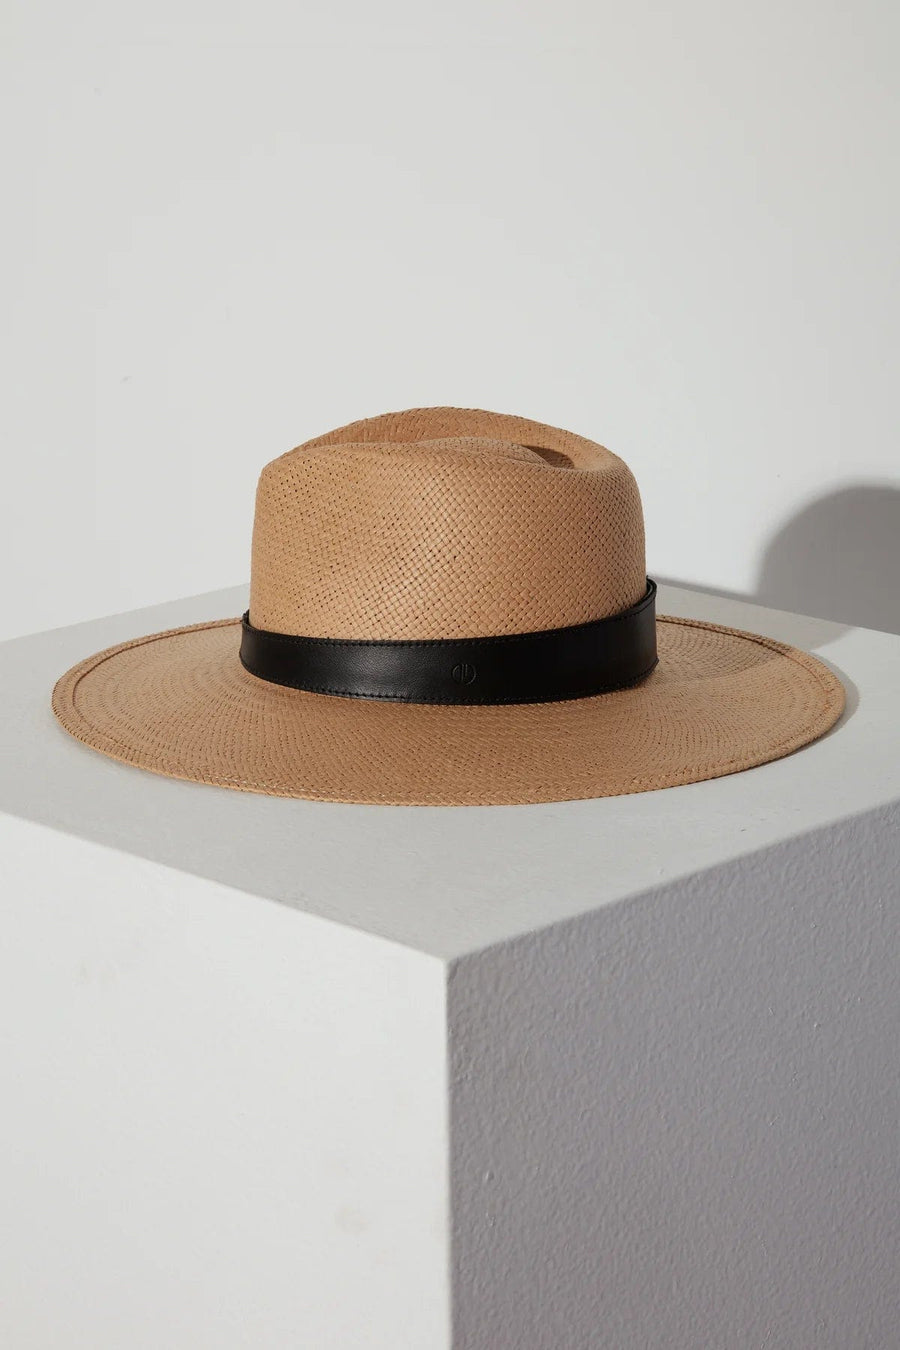 Janessa Leone Hats Savannah Hat